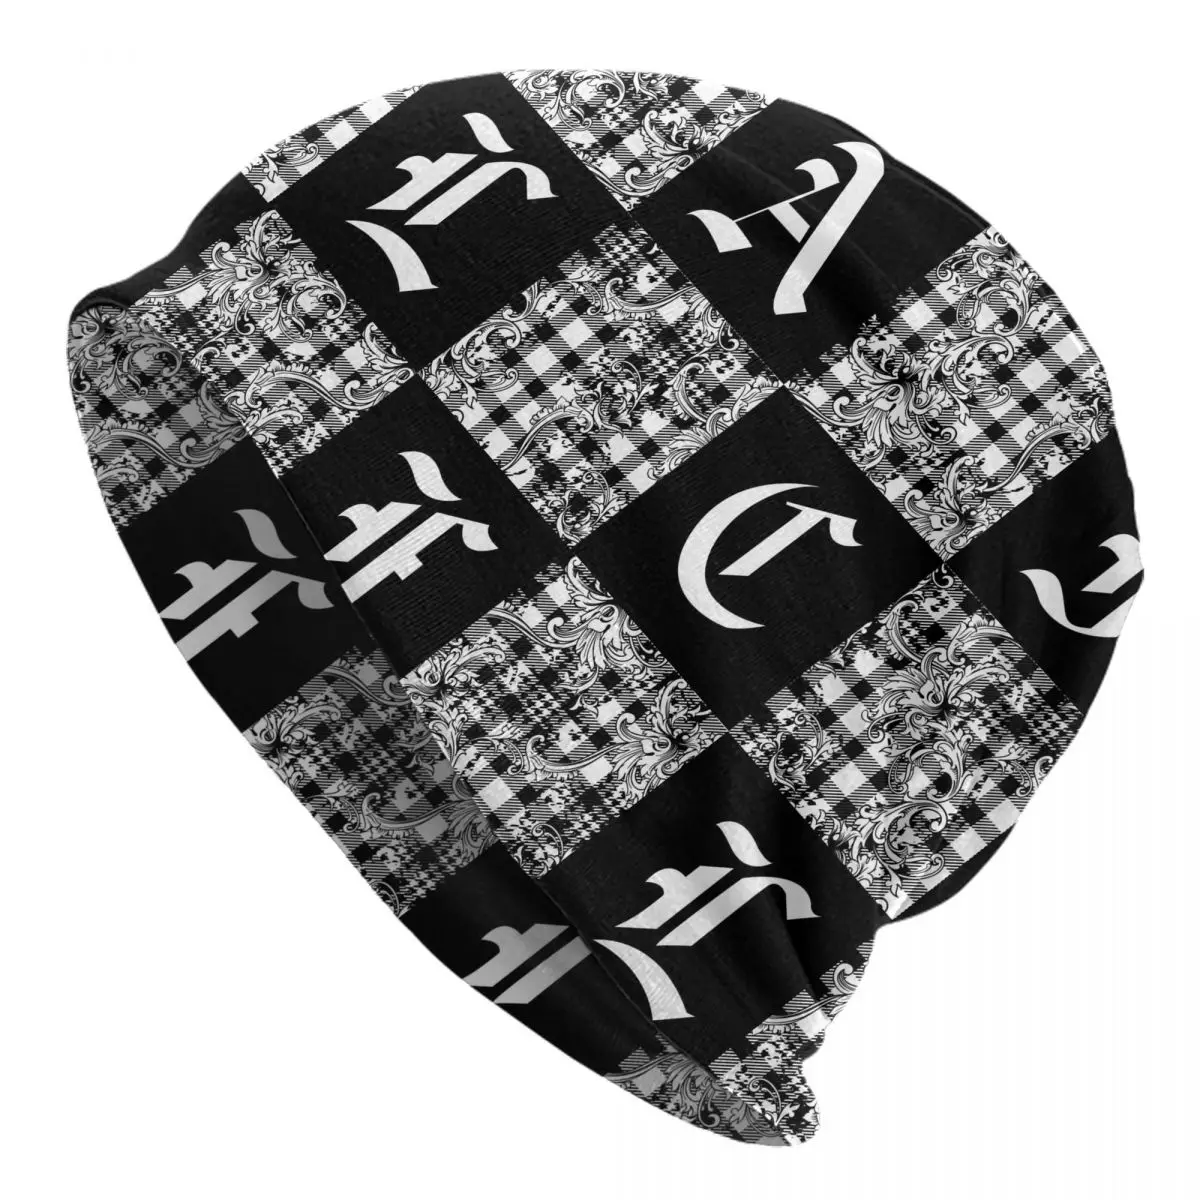 Tartan Design Adult Men's Women's Knit Hat Keep warm winter knitted hat